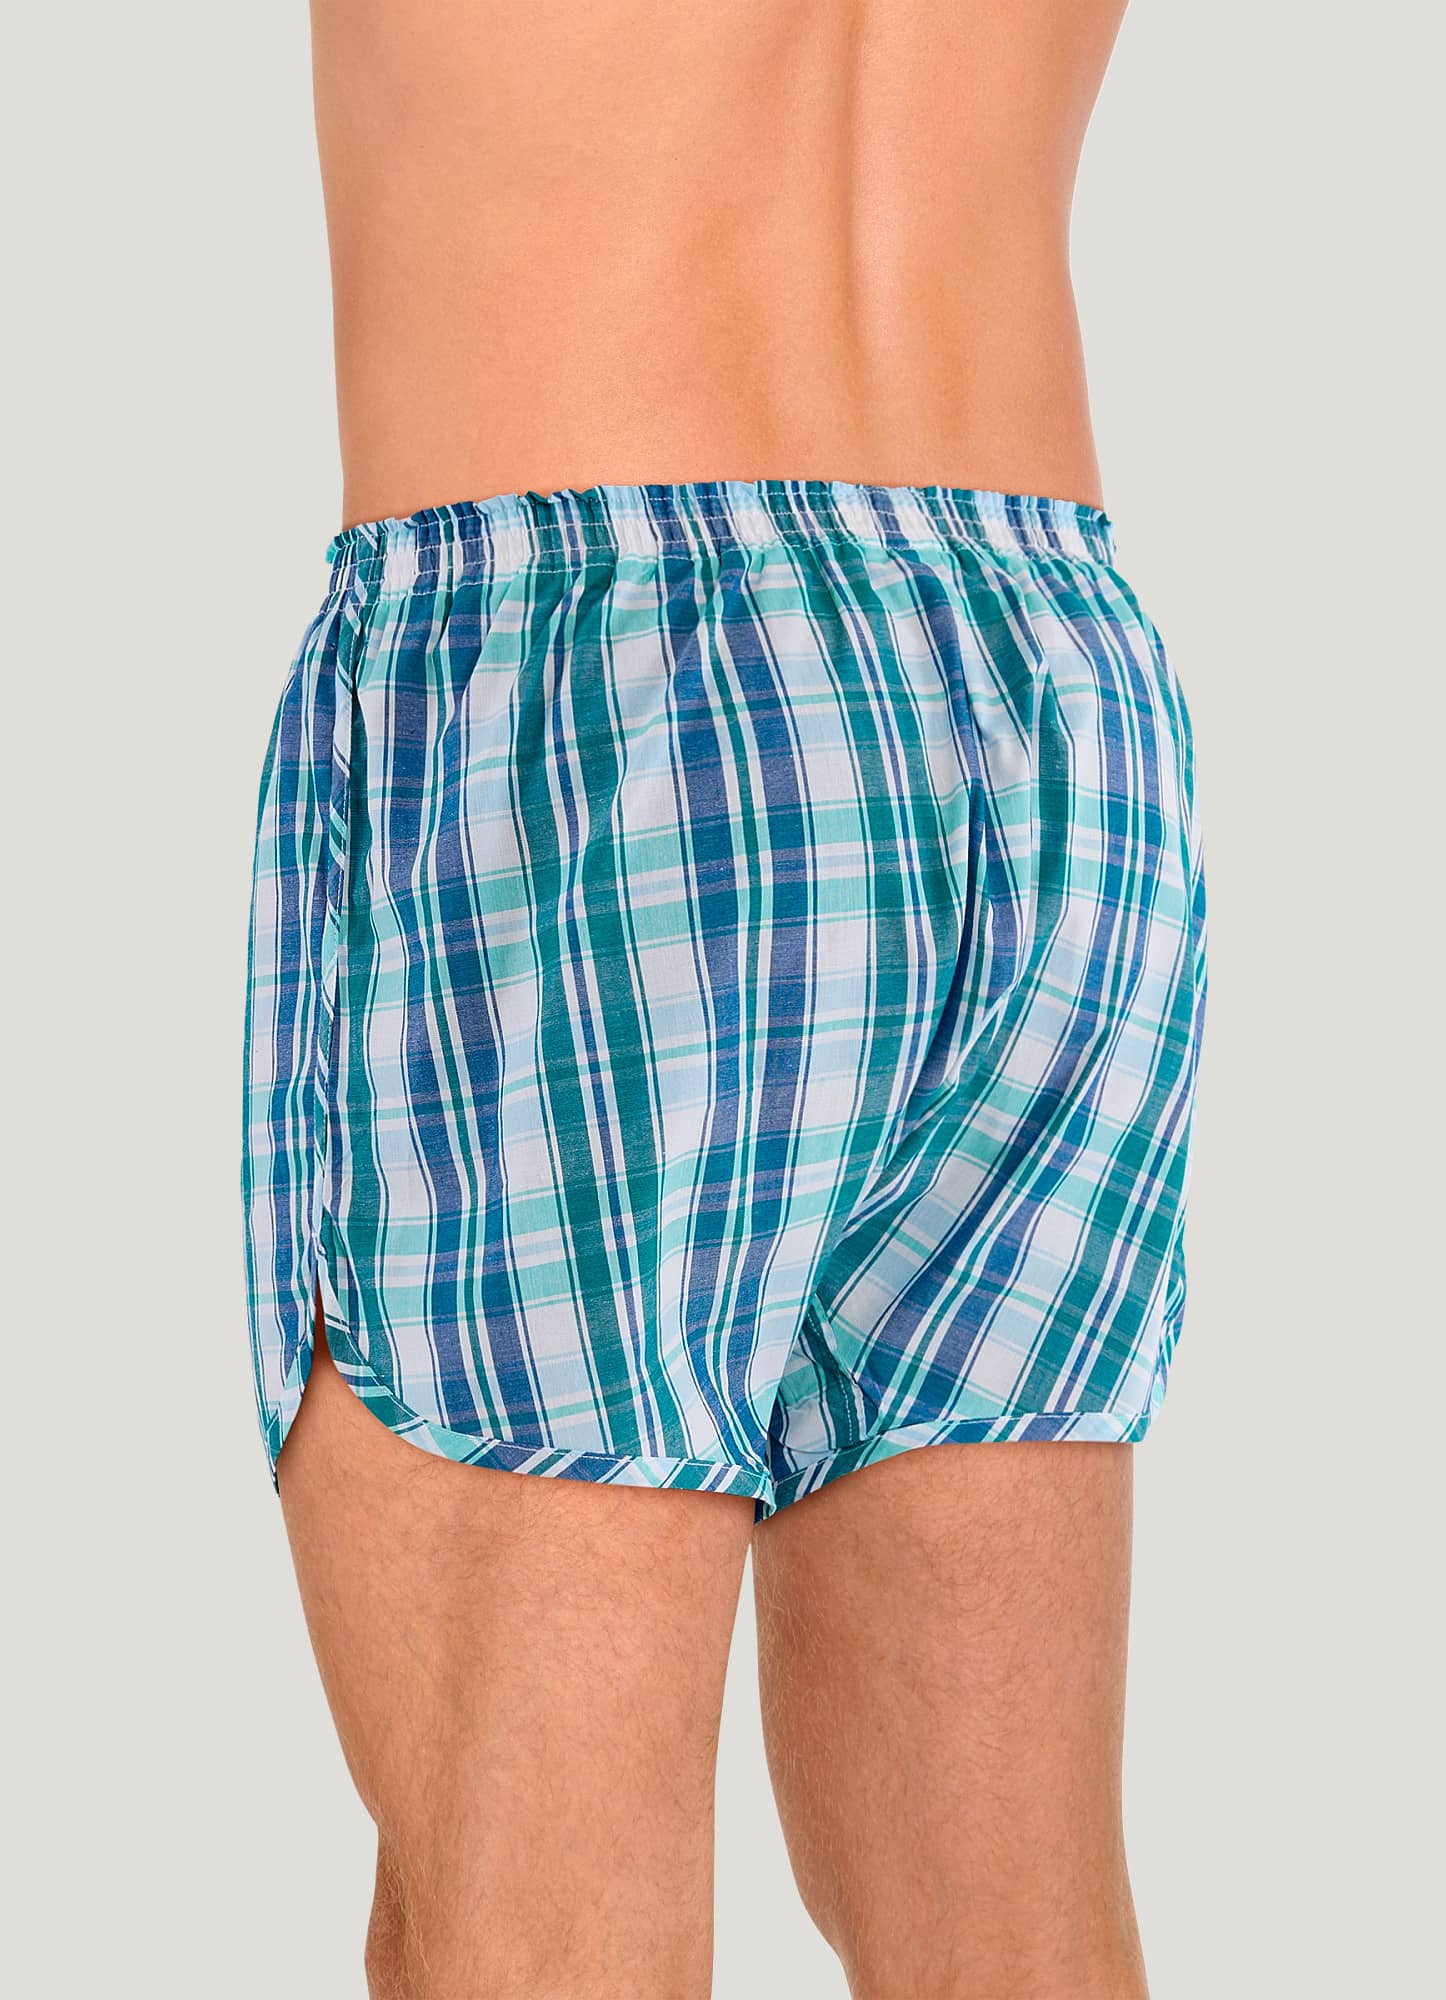 Underwear 5 Pack - Multi Stripe